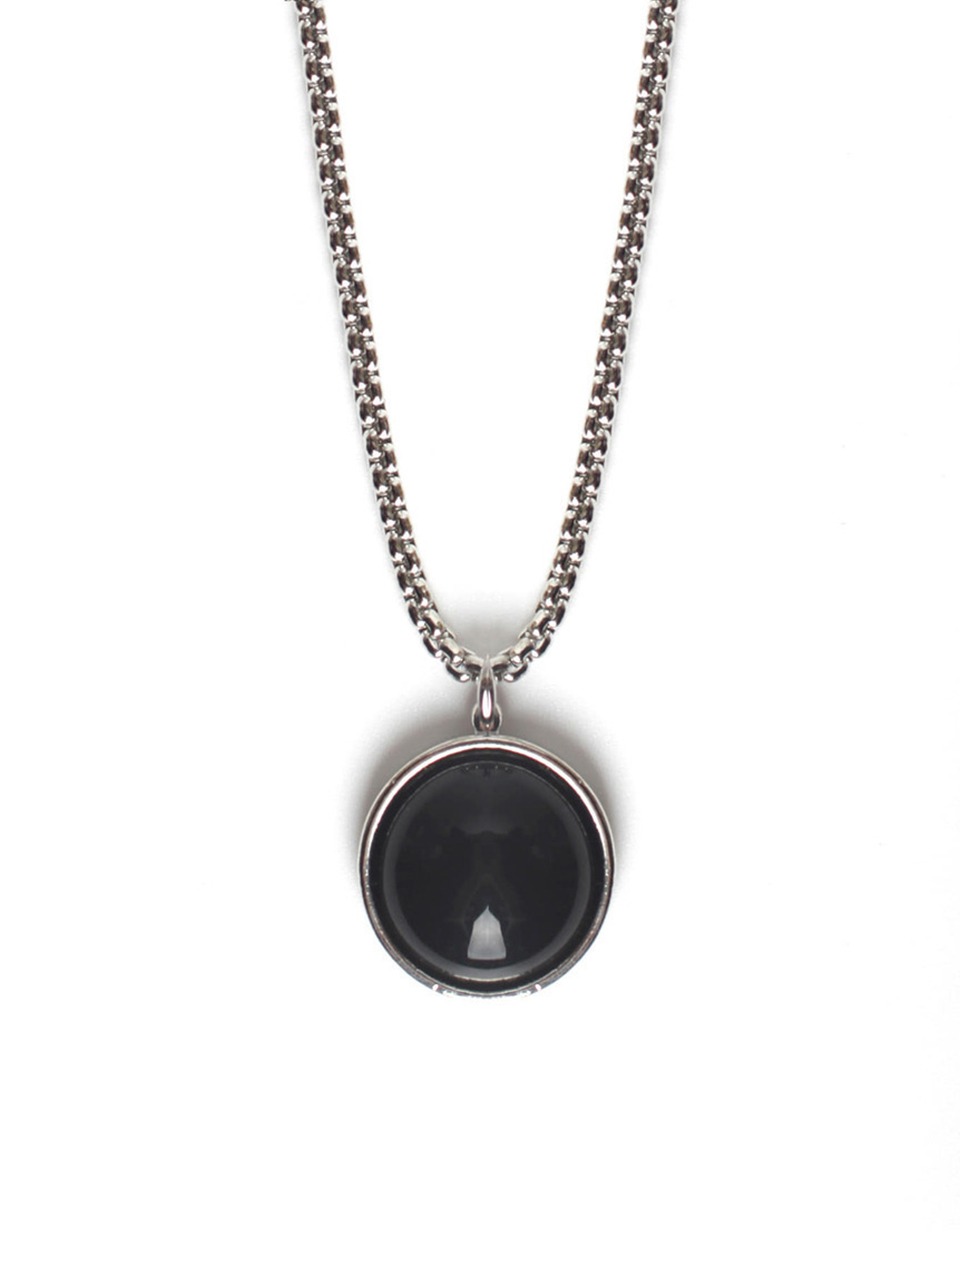 SCB066 Black pendant necklace